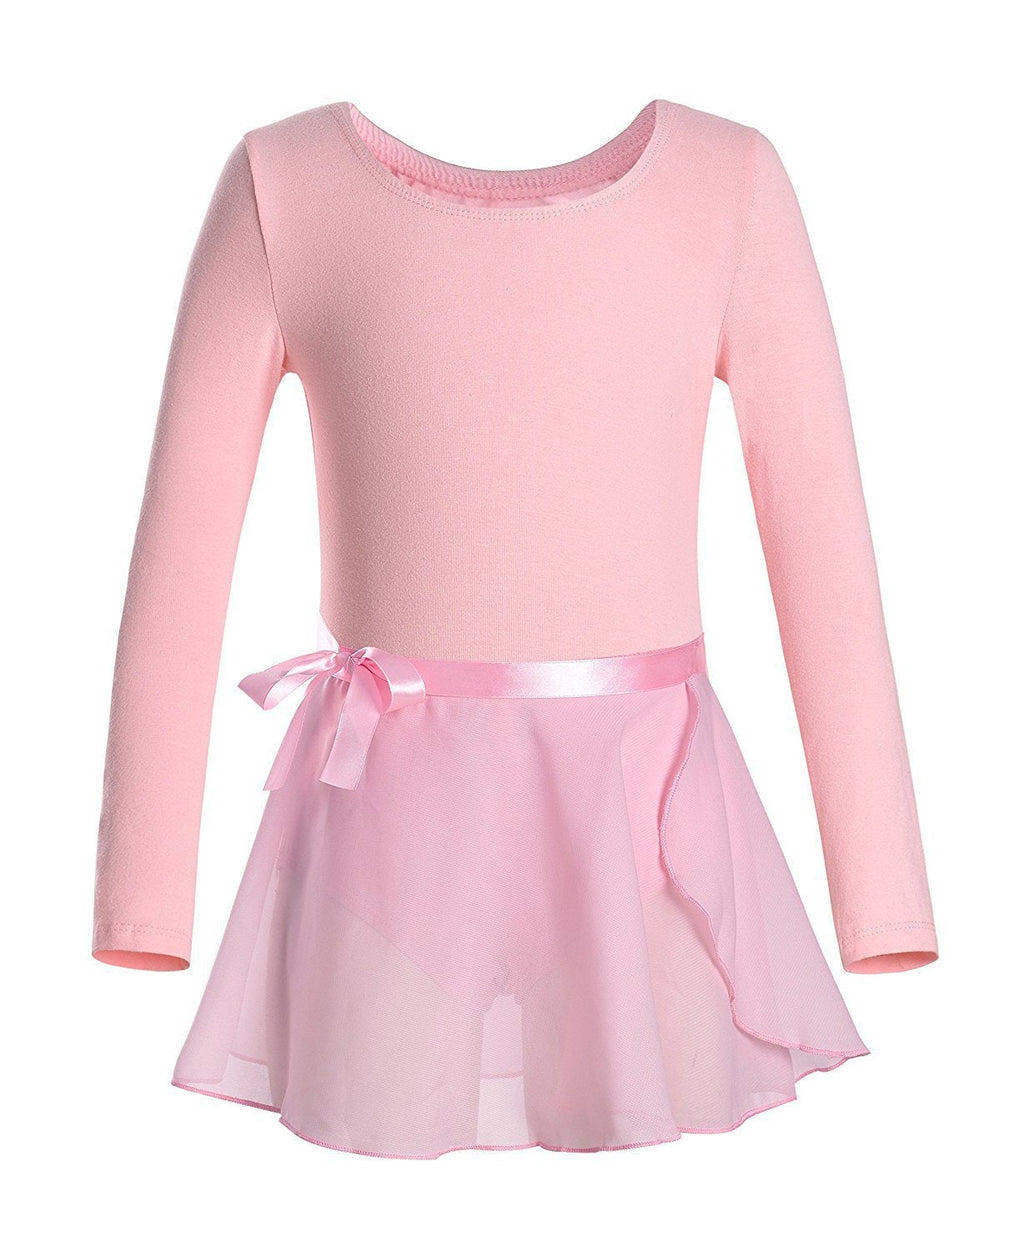 [AUSTRALIA] - Girls Team Basics Long Sleeve Dance Leotard with Wrap-Round Skirt Ballet Costume Dress 140 (6-8 T) A_pink 